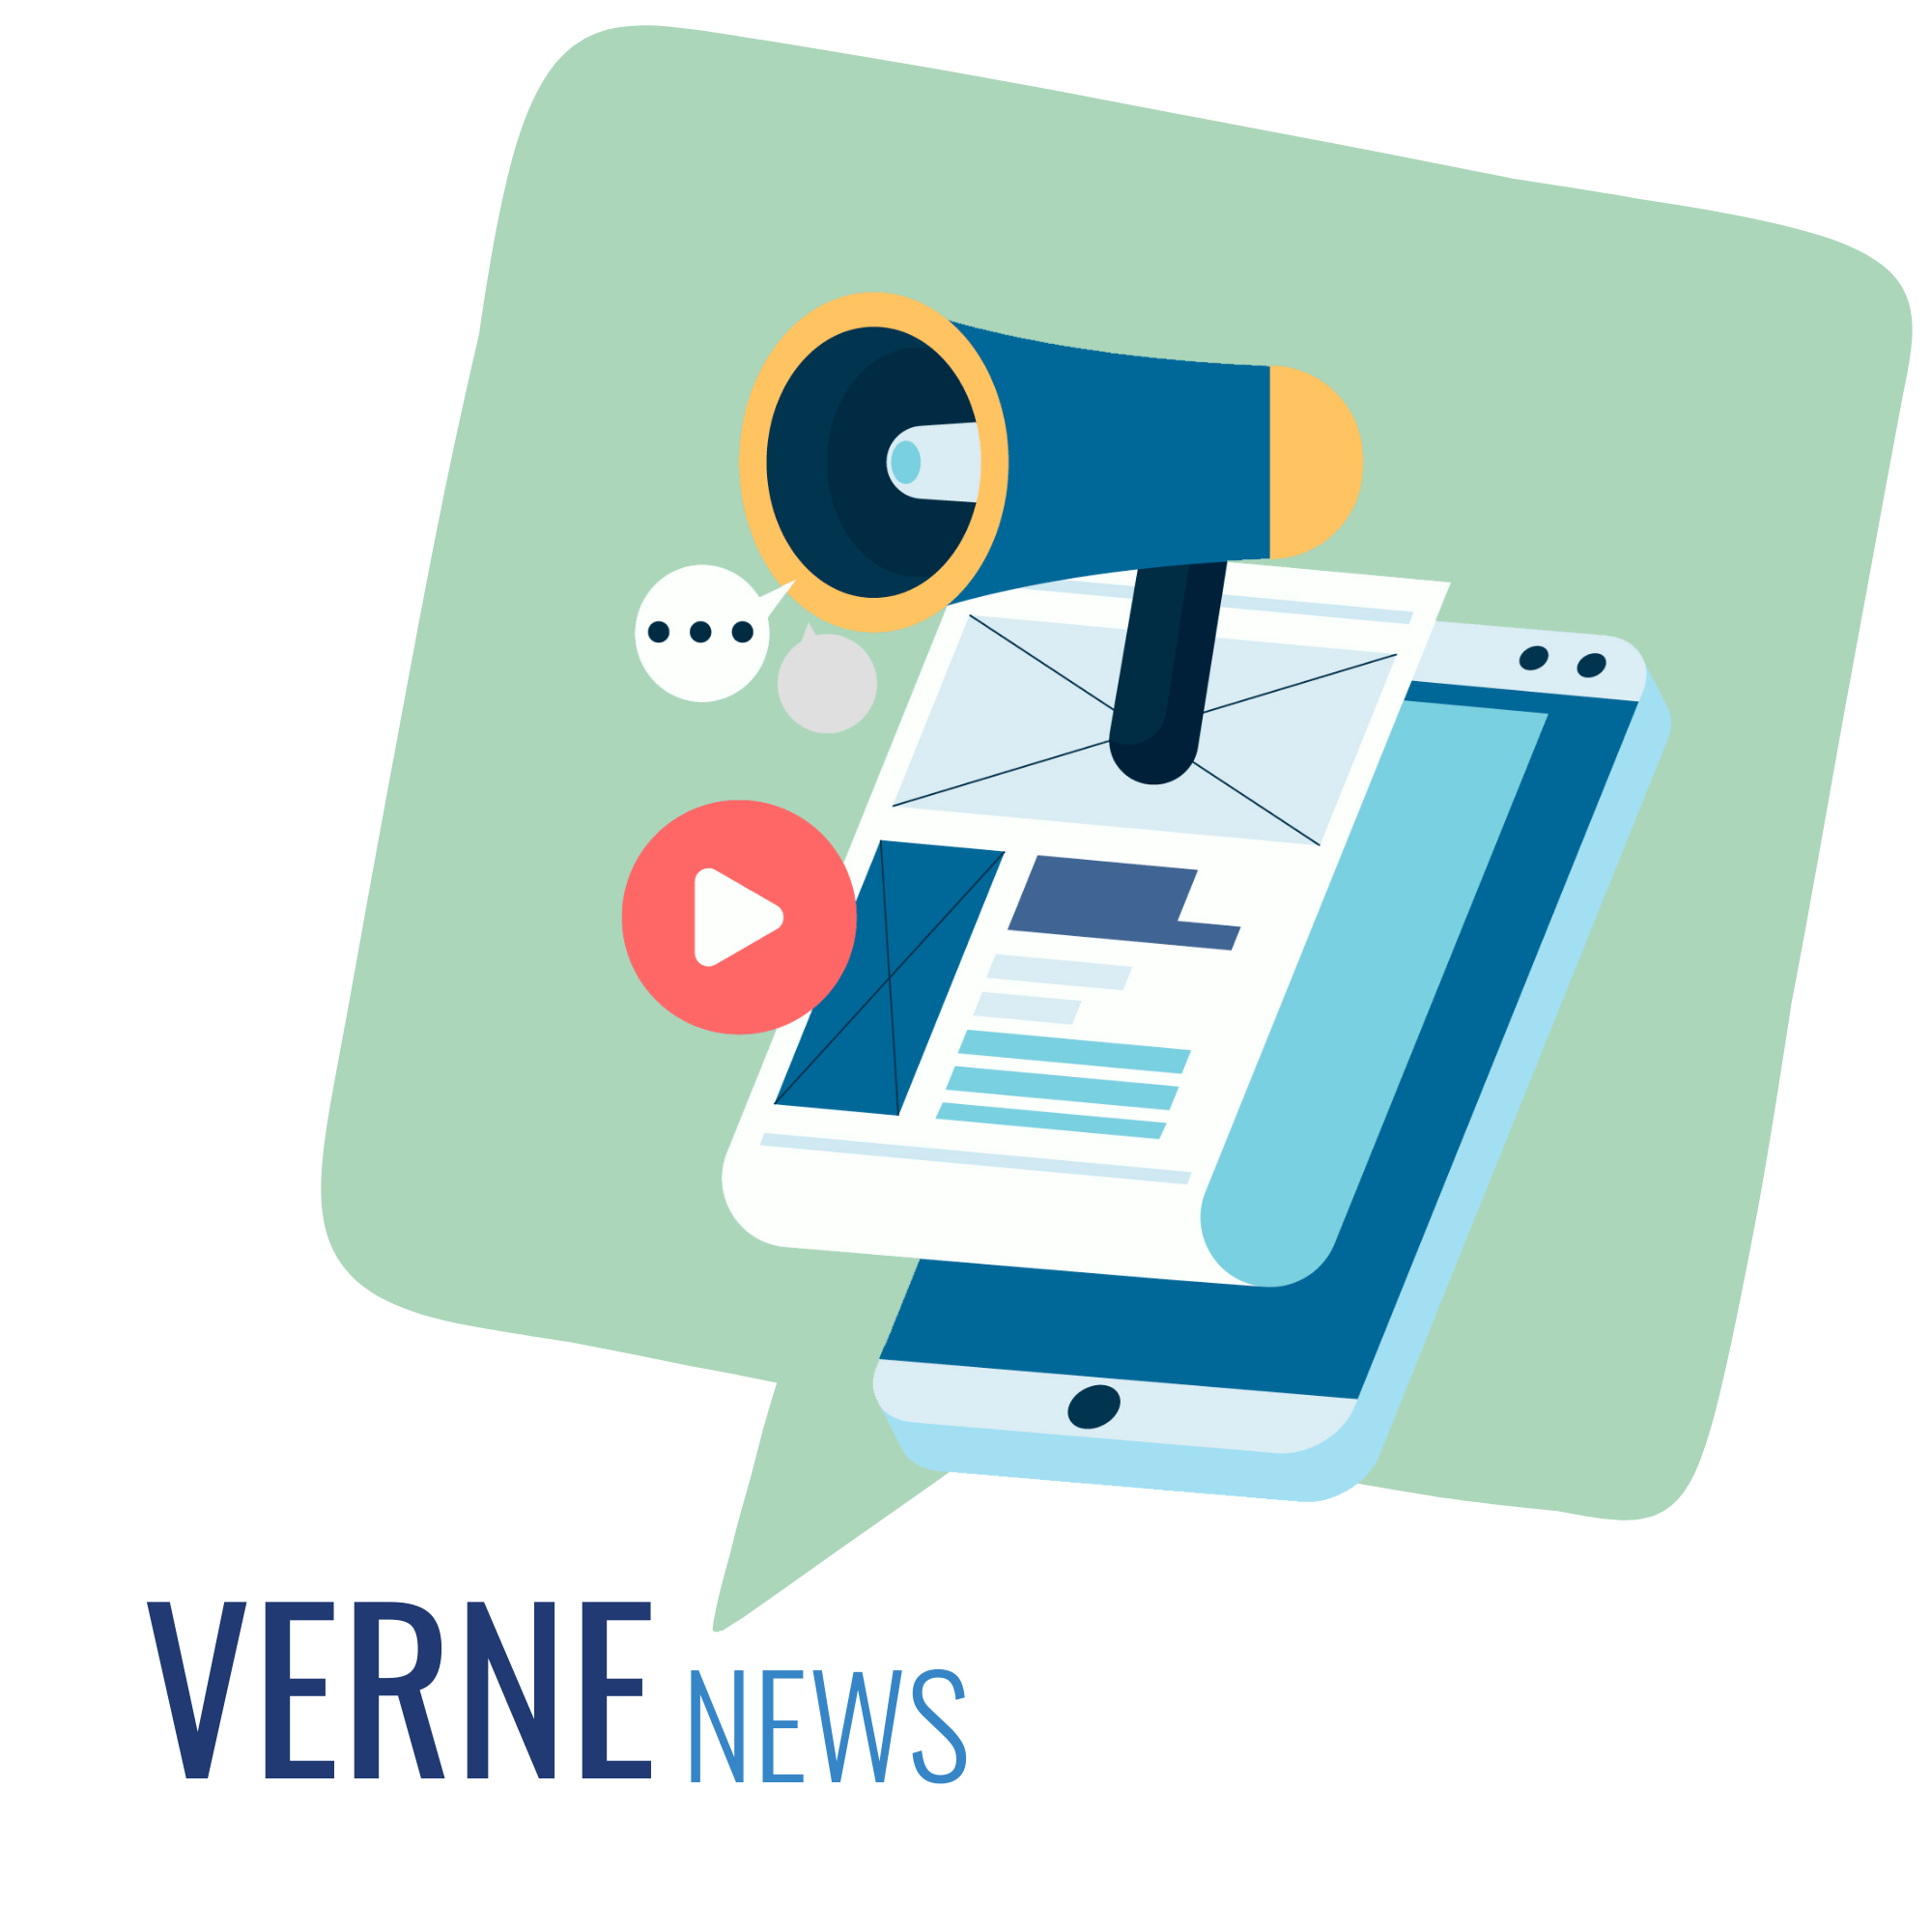 Verne News _ Verne TECH